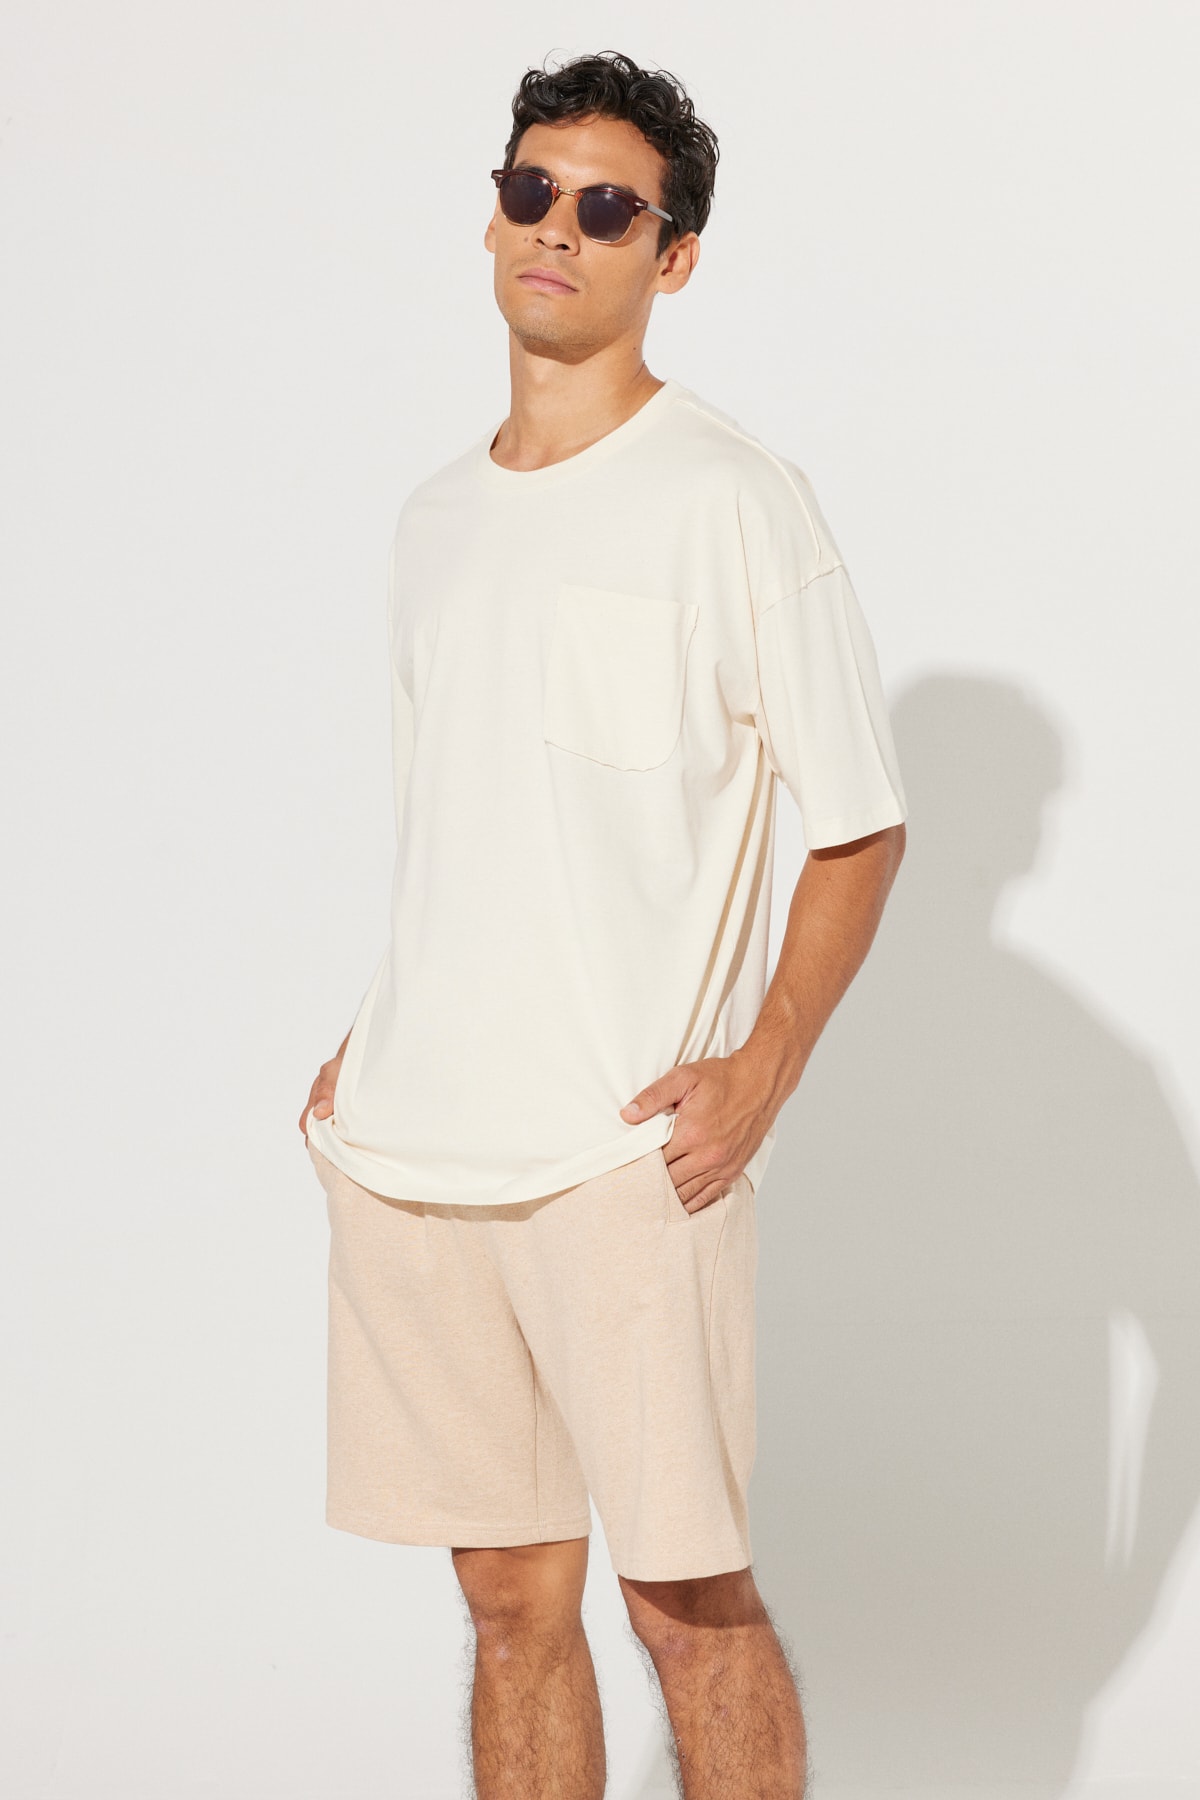 ALTINYILDIZ CLASSICS Men's Milk Brown Standard Fit Normal Cut 100% Cotton Shorts with Pocket.